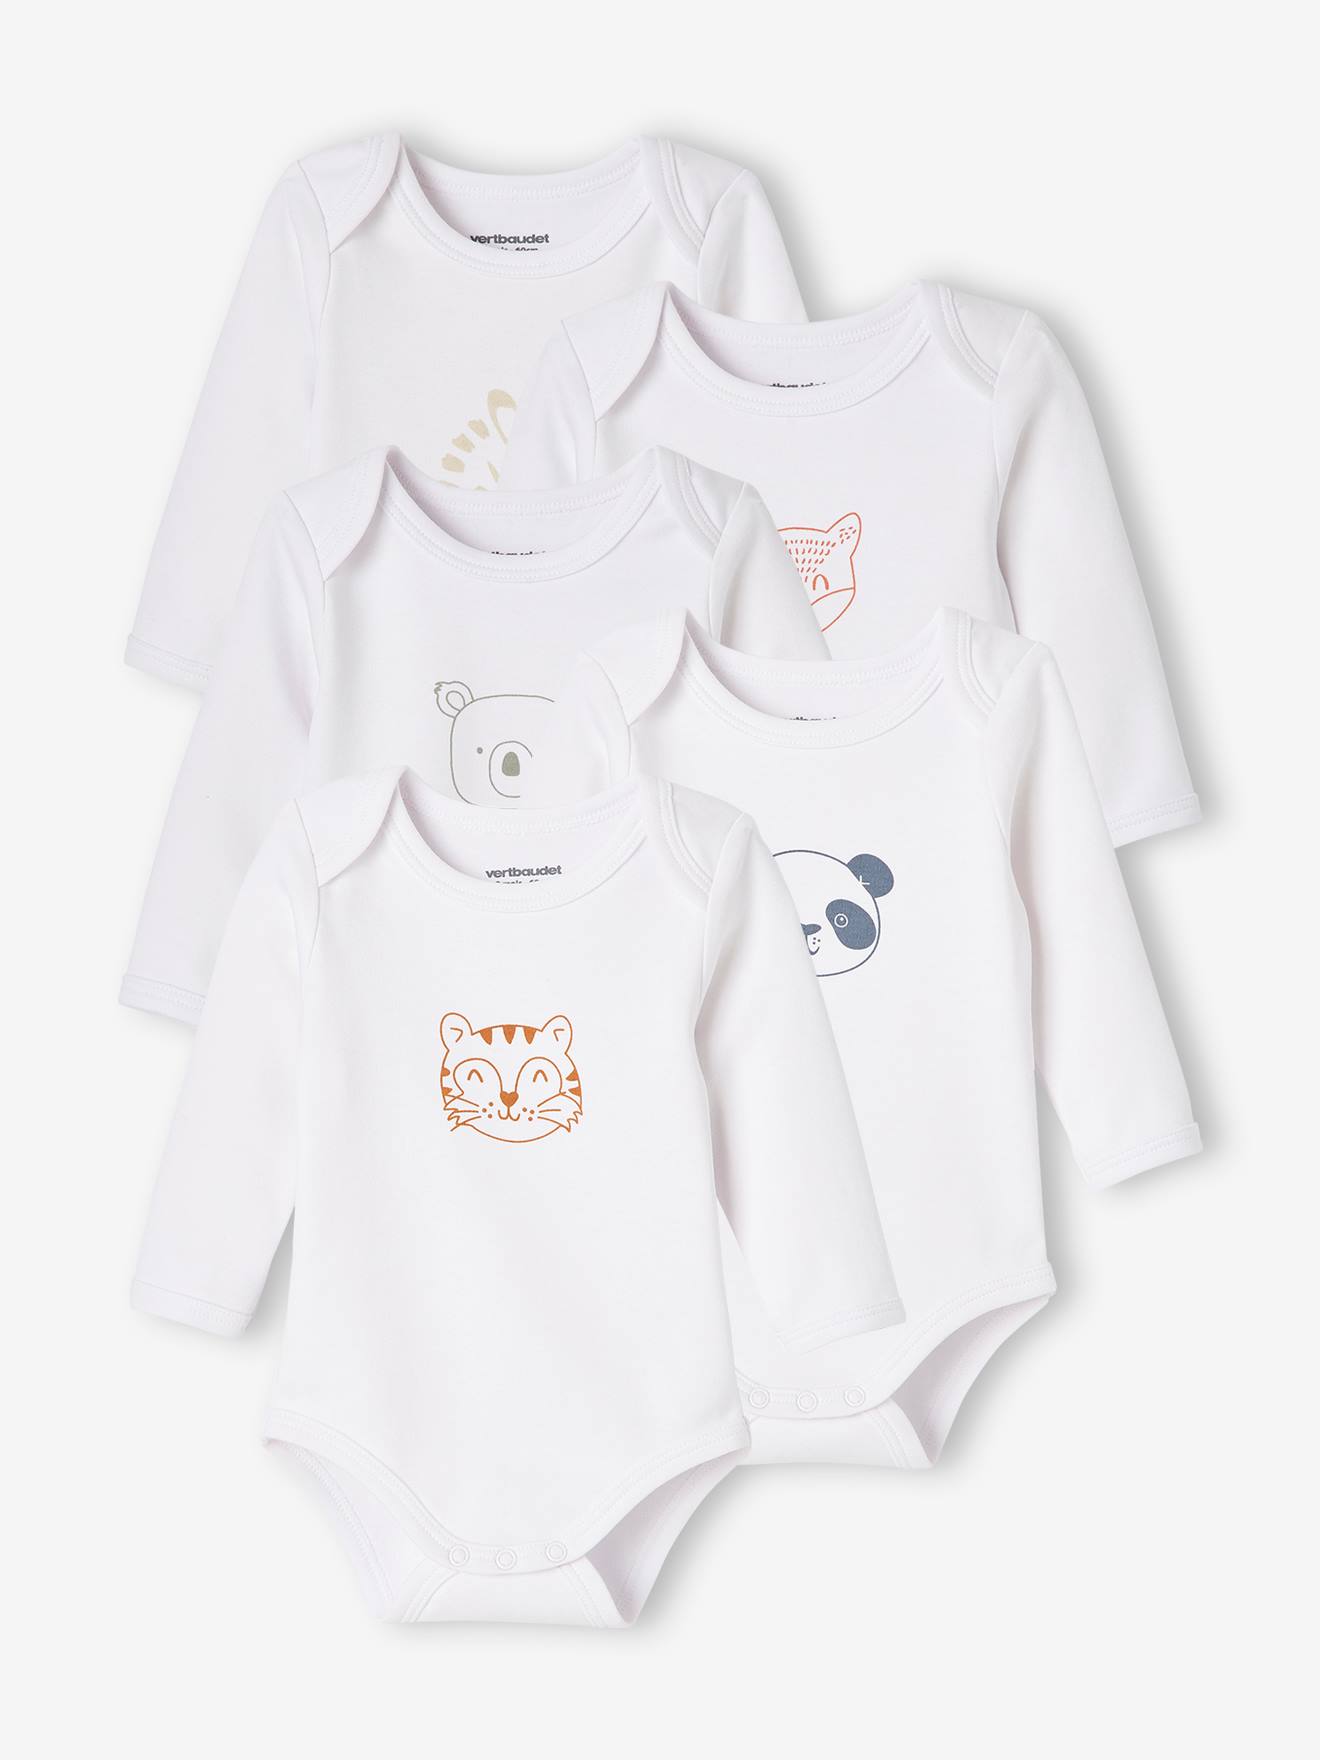 https://media.vertbaudet.com/Pictures/vertbaudet/238197/pack-of-5-animals-long-sleeve-bodysuits-for-newborn-babies-cutaway-shoulders.jpg